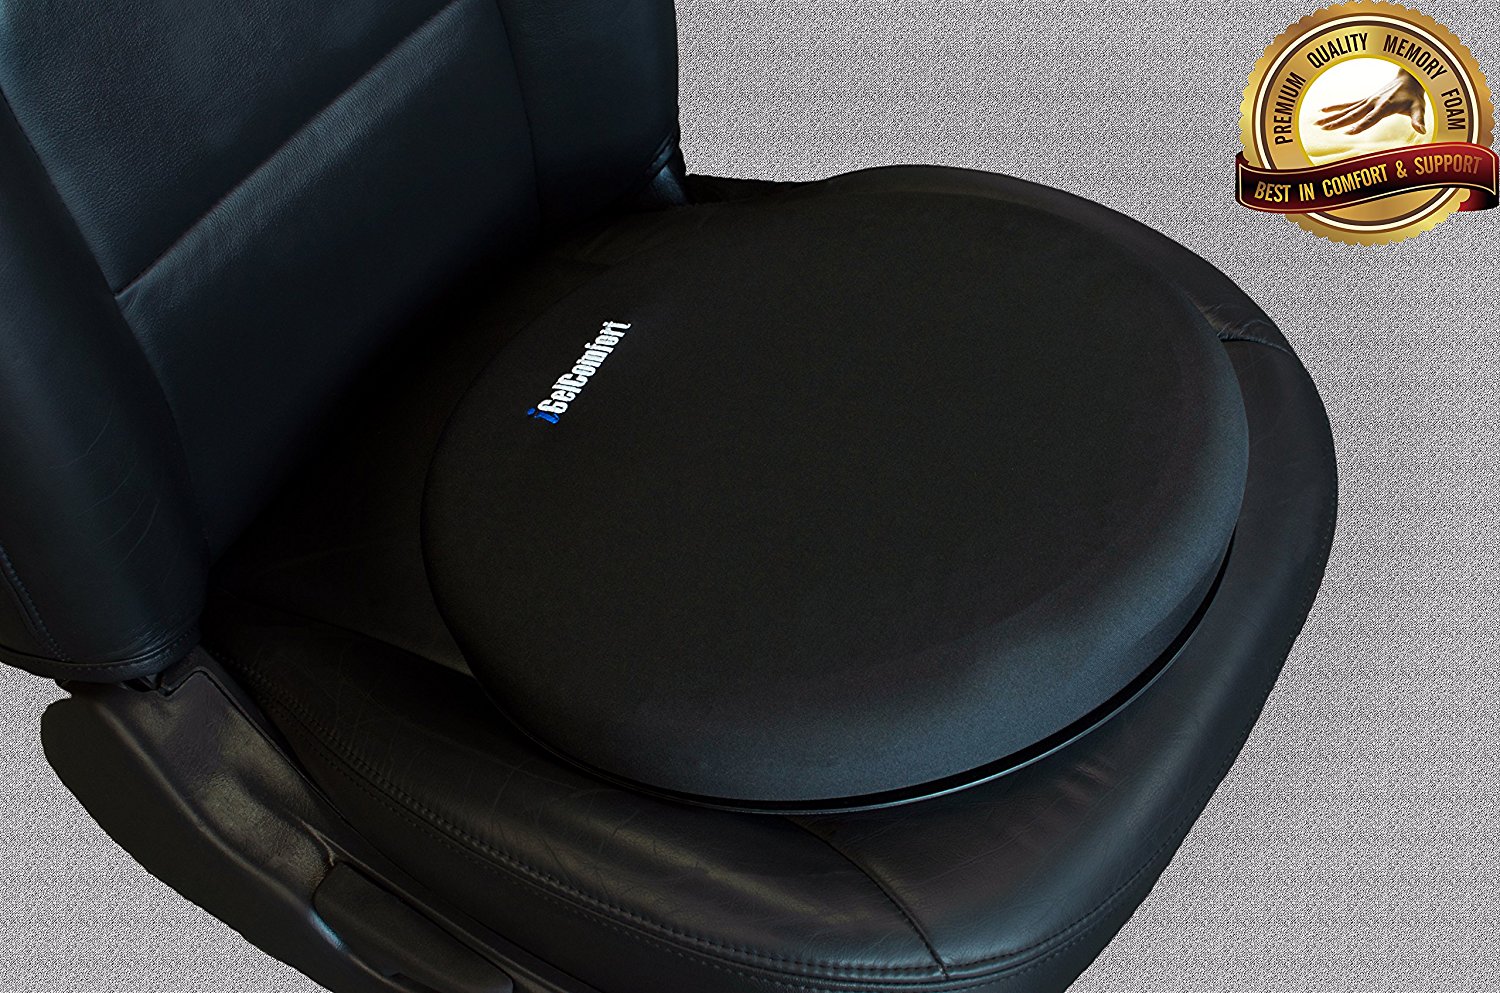 a black pancake-shaped cushion sits on a car bucket seat